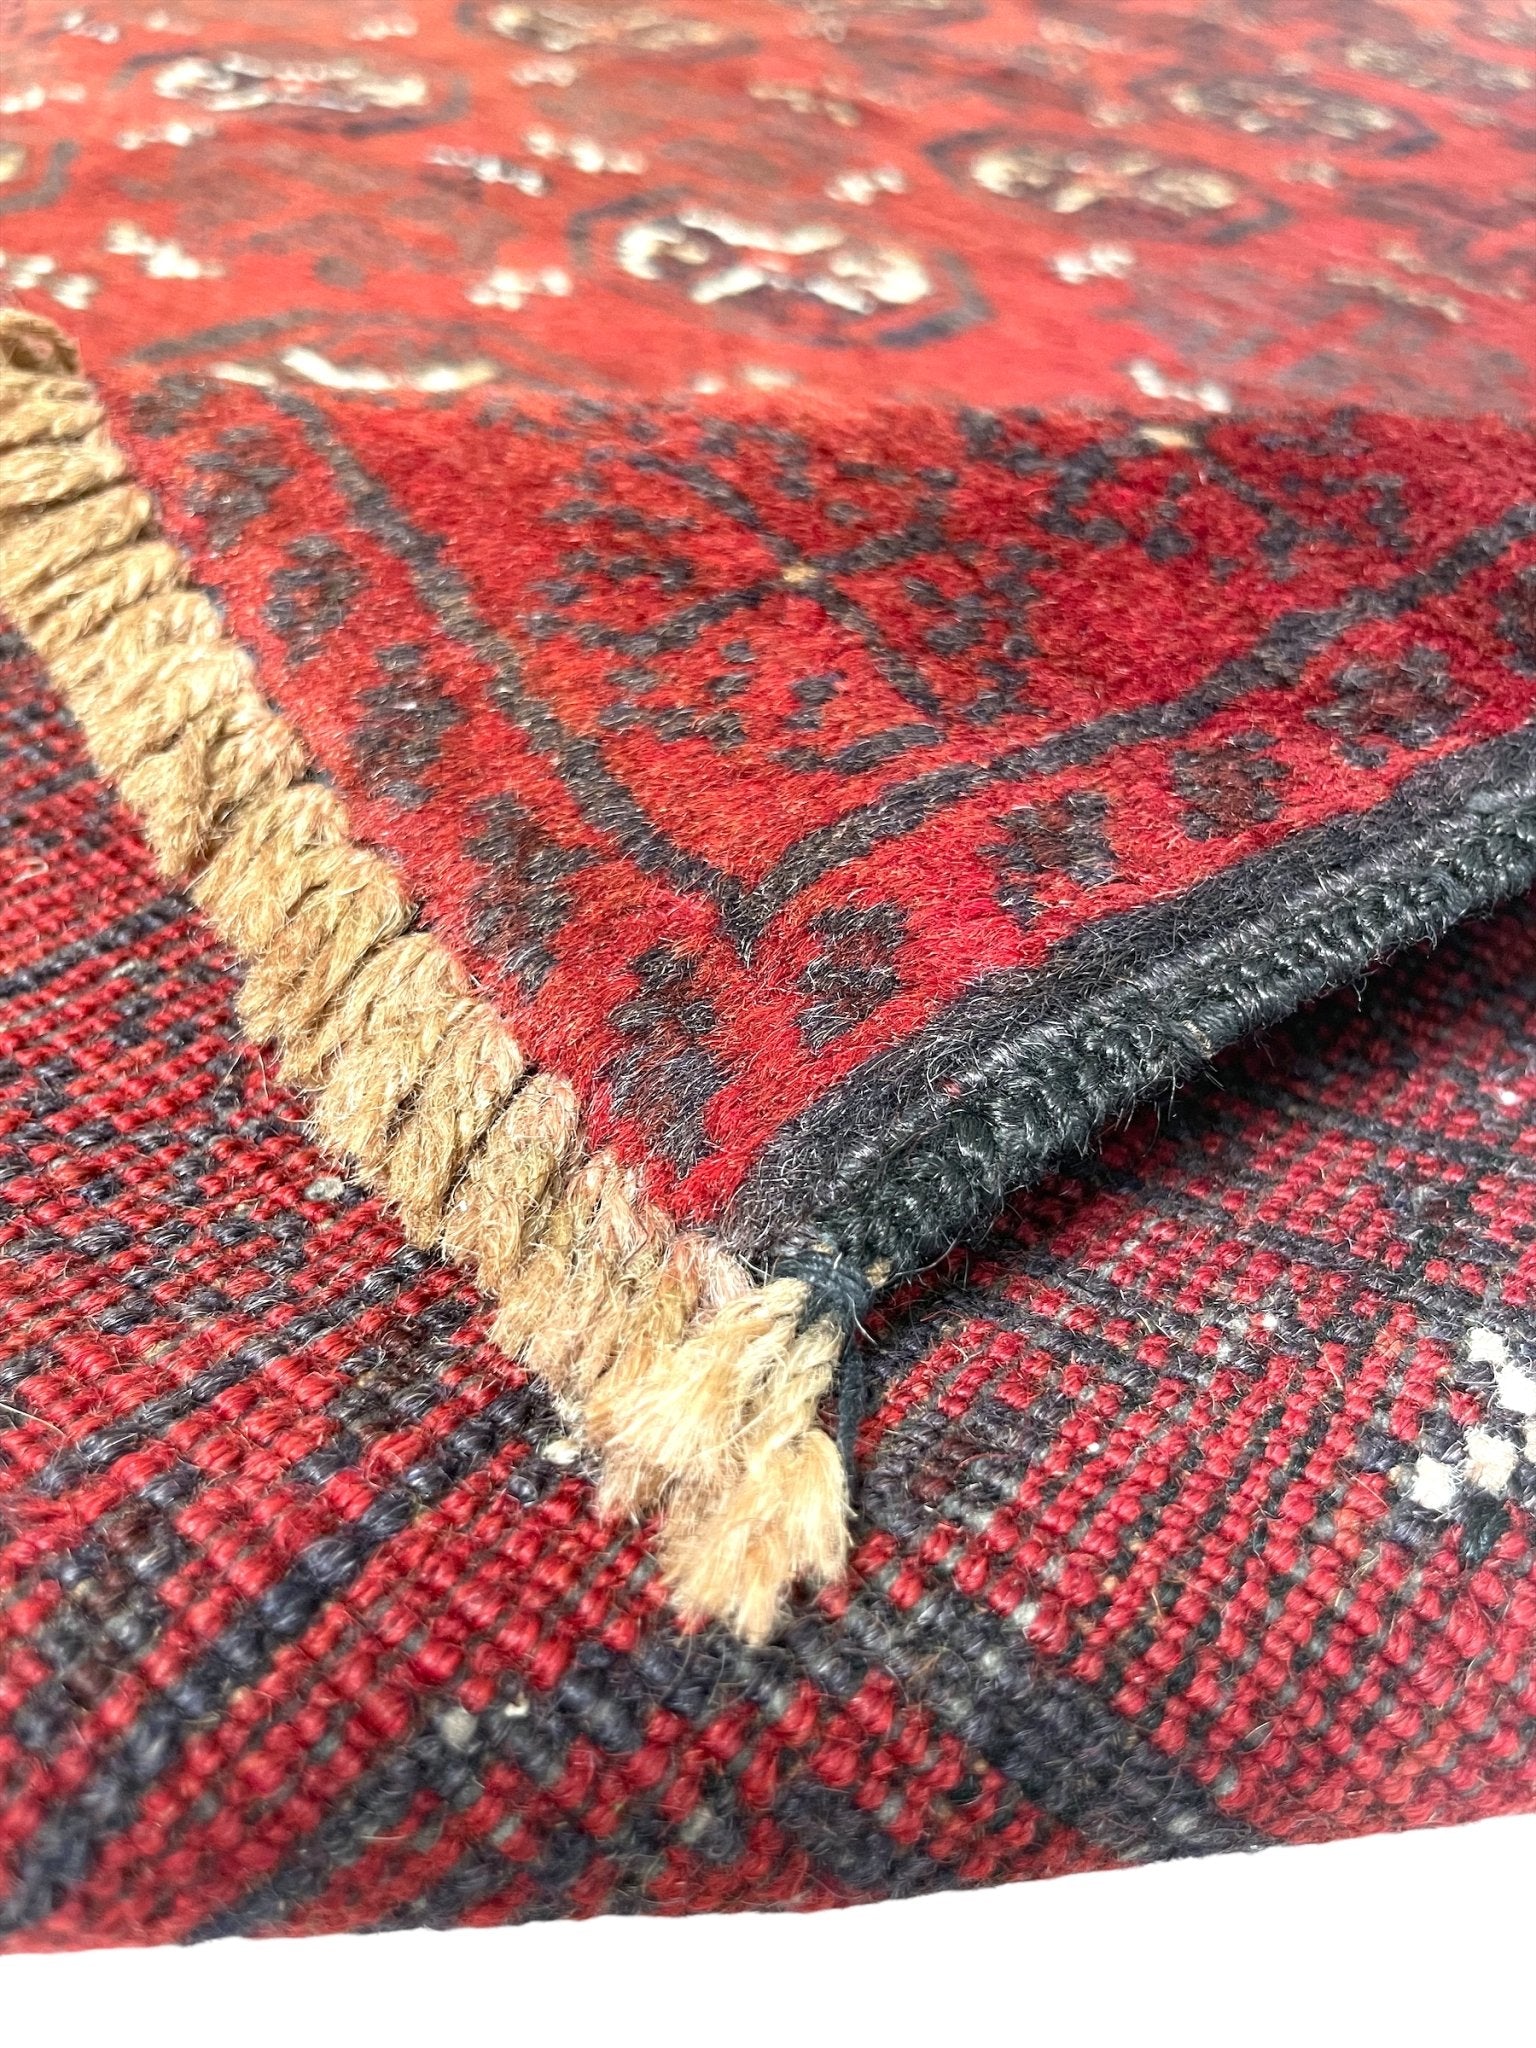 KASHF 100% Wool Prayer Rug by Asrār Collection 2'9" x 4'5"